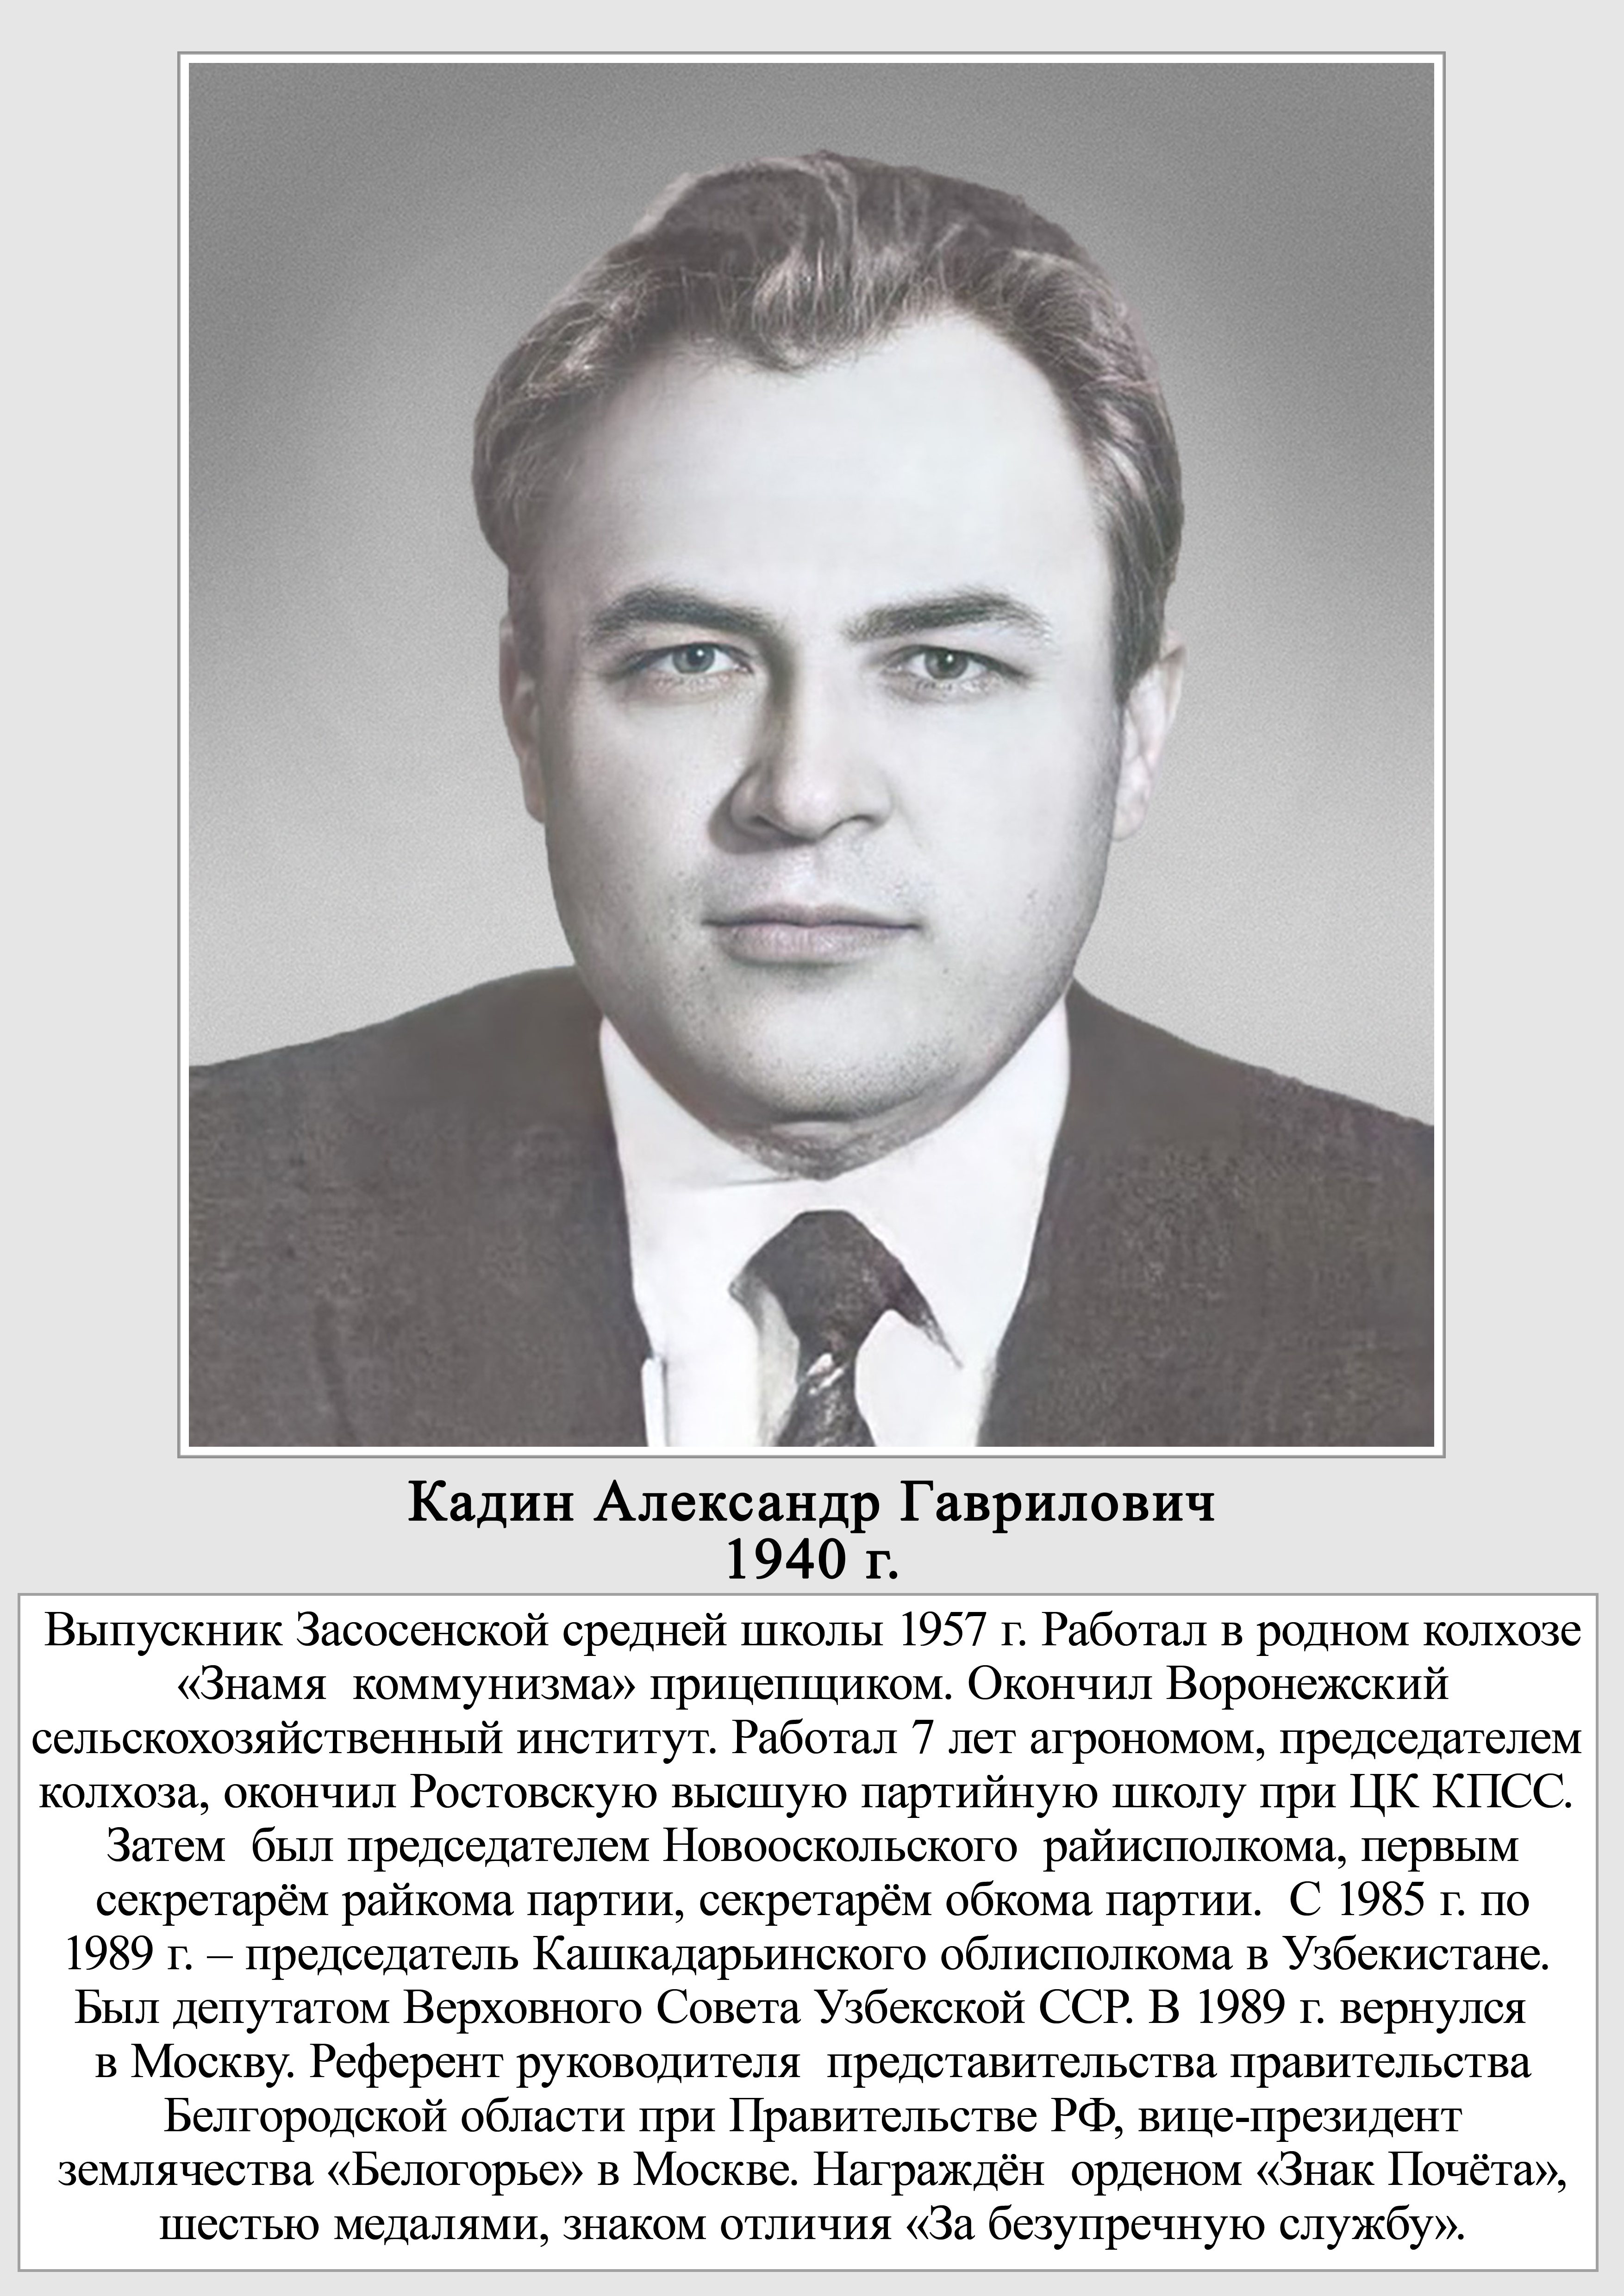 Кадин Александр Гаврилович.